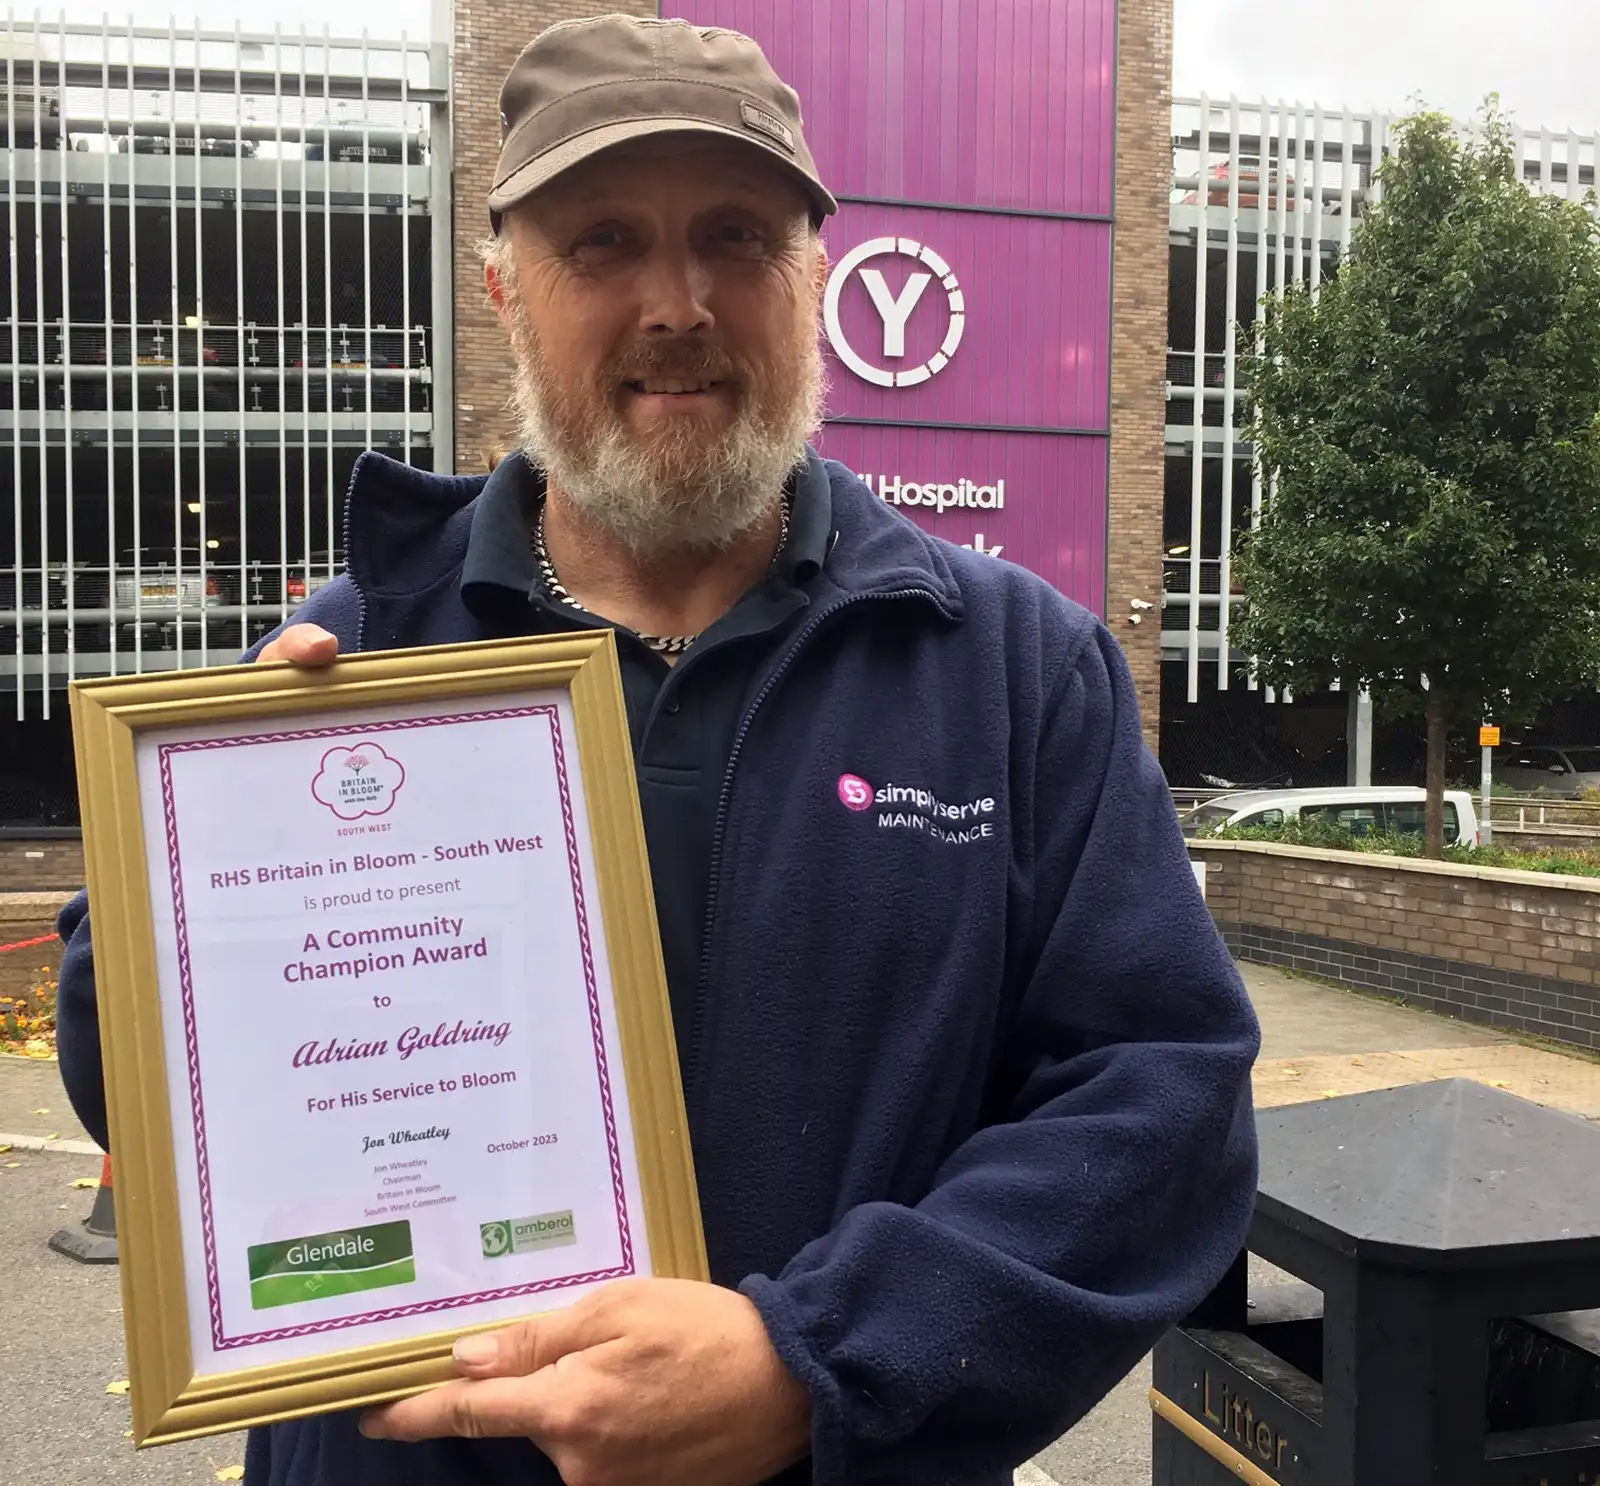 Gardener Adrian Goldring with the award